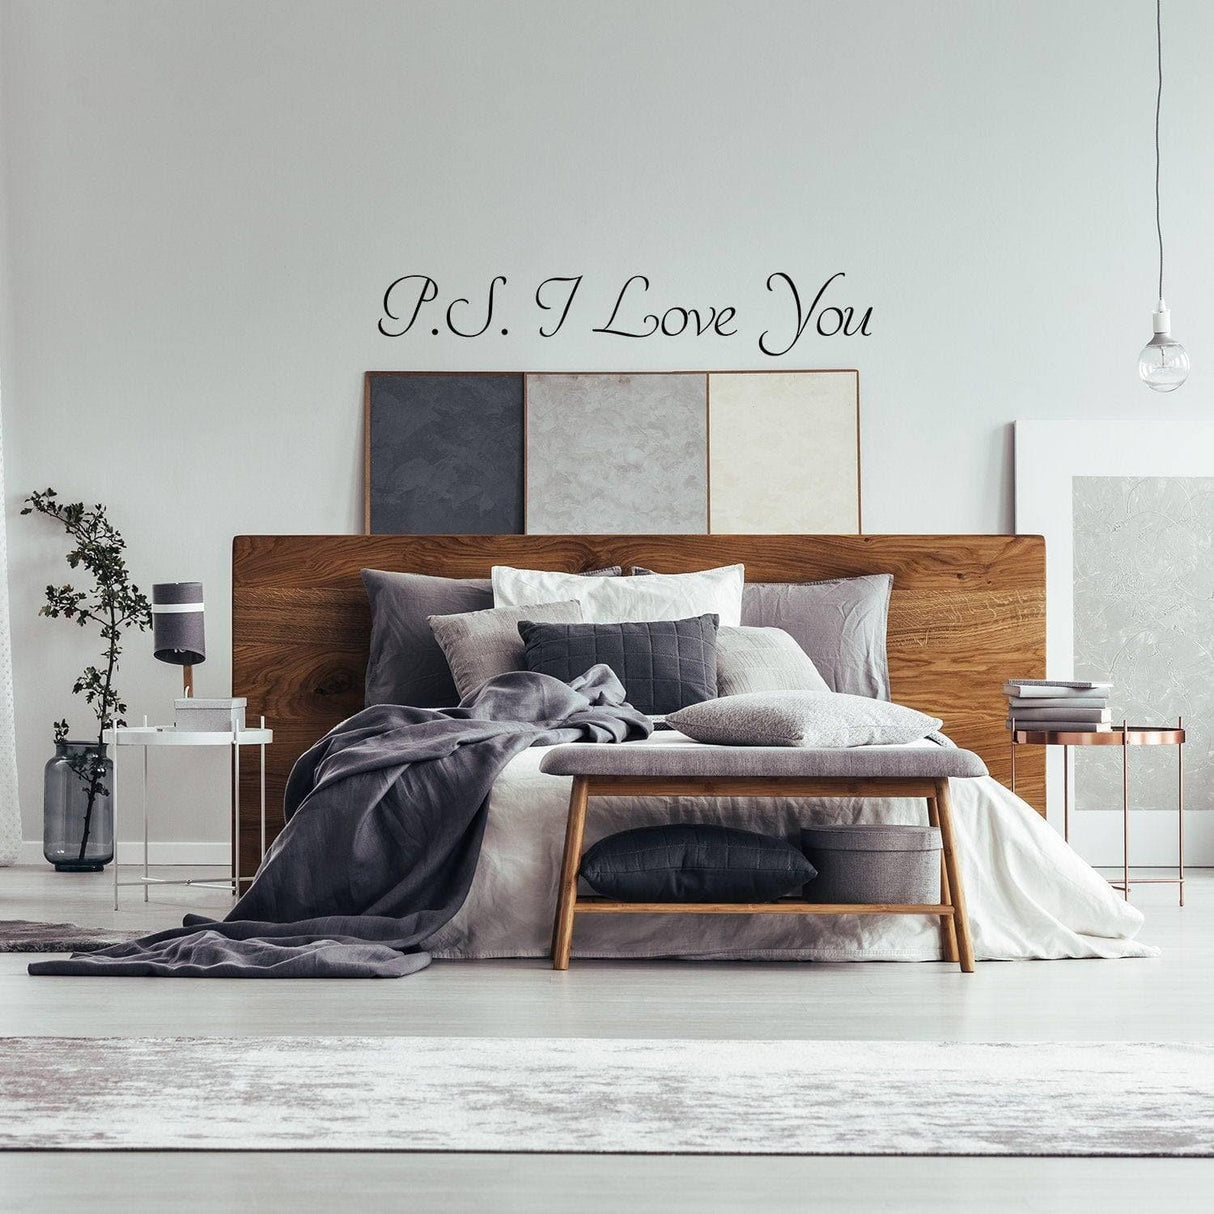 Romantic Bedroom Wall Sticker Vinyl Quote Decal Love - Decords –